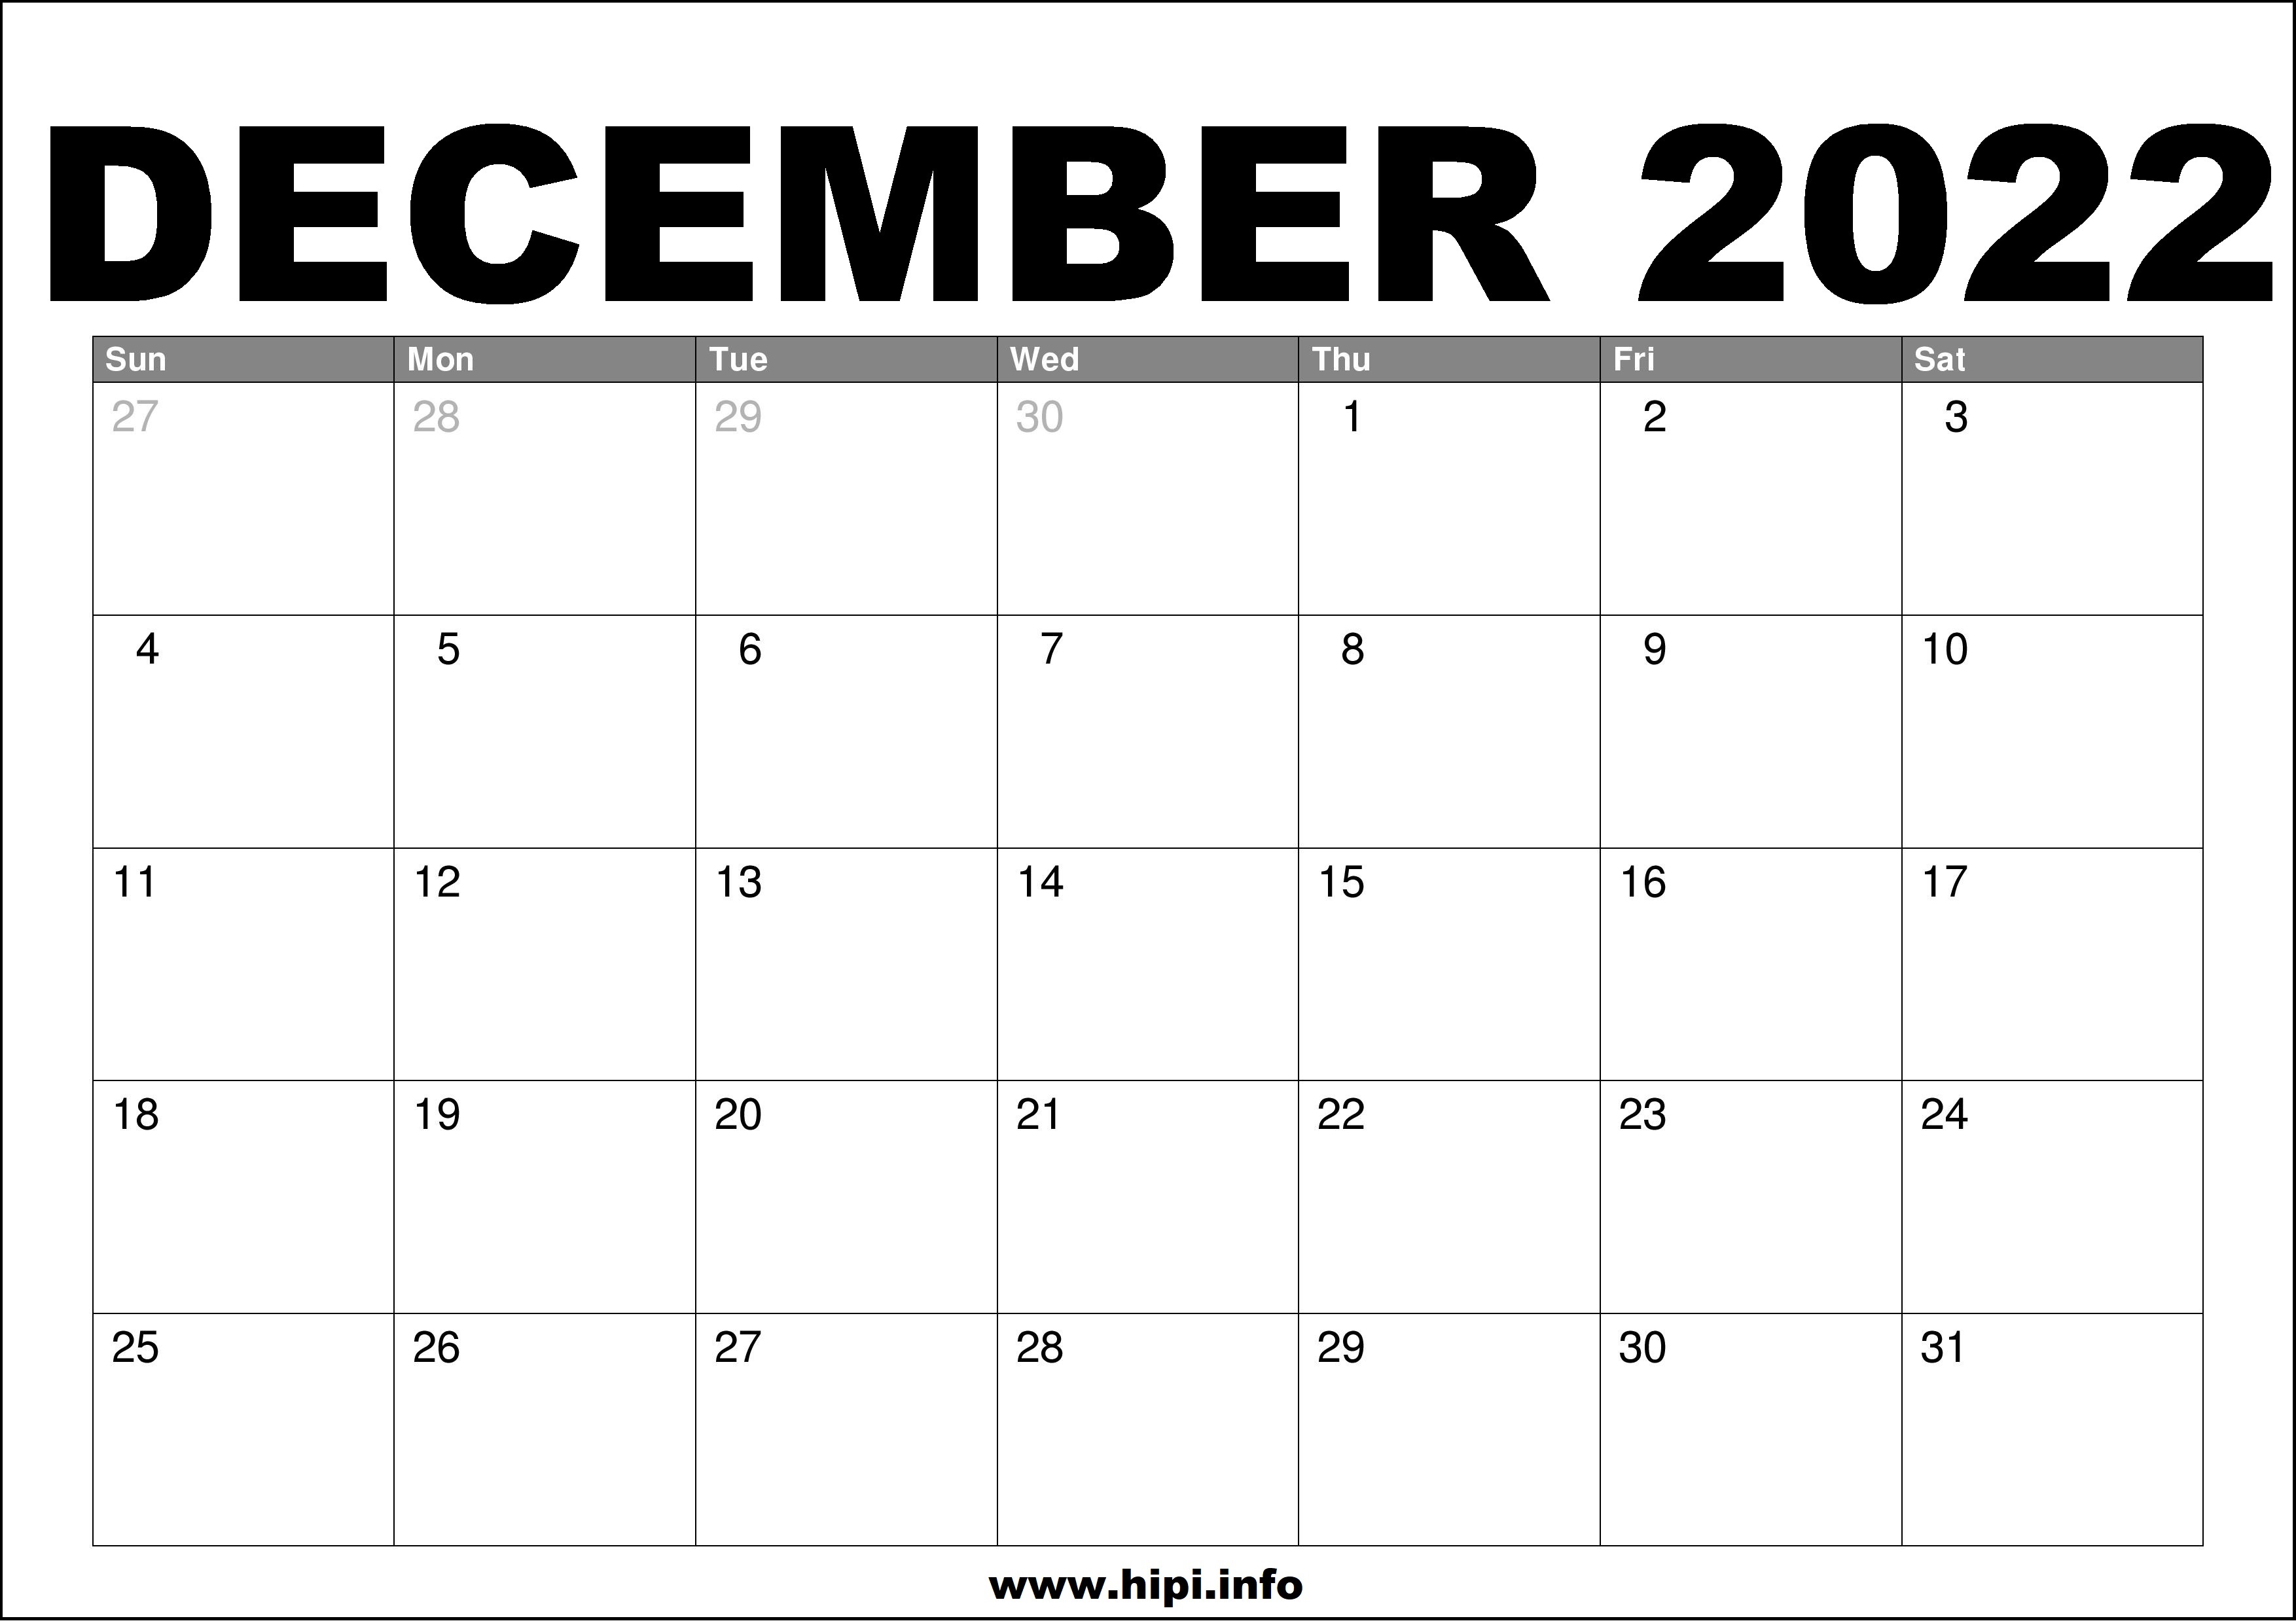 December 2022 Calendar Pdf December 2022 Calendar Printable Free - Hipi.info | Calendars Printable Free